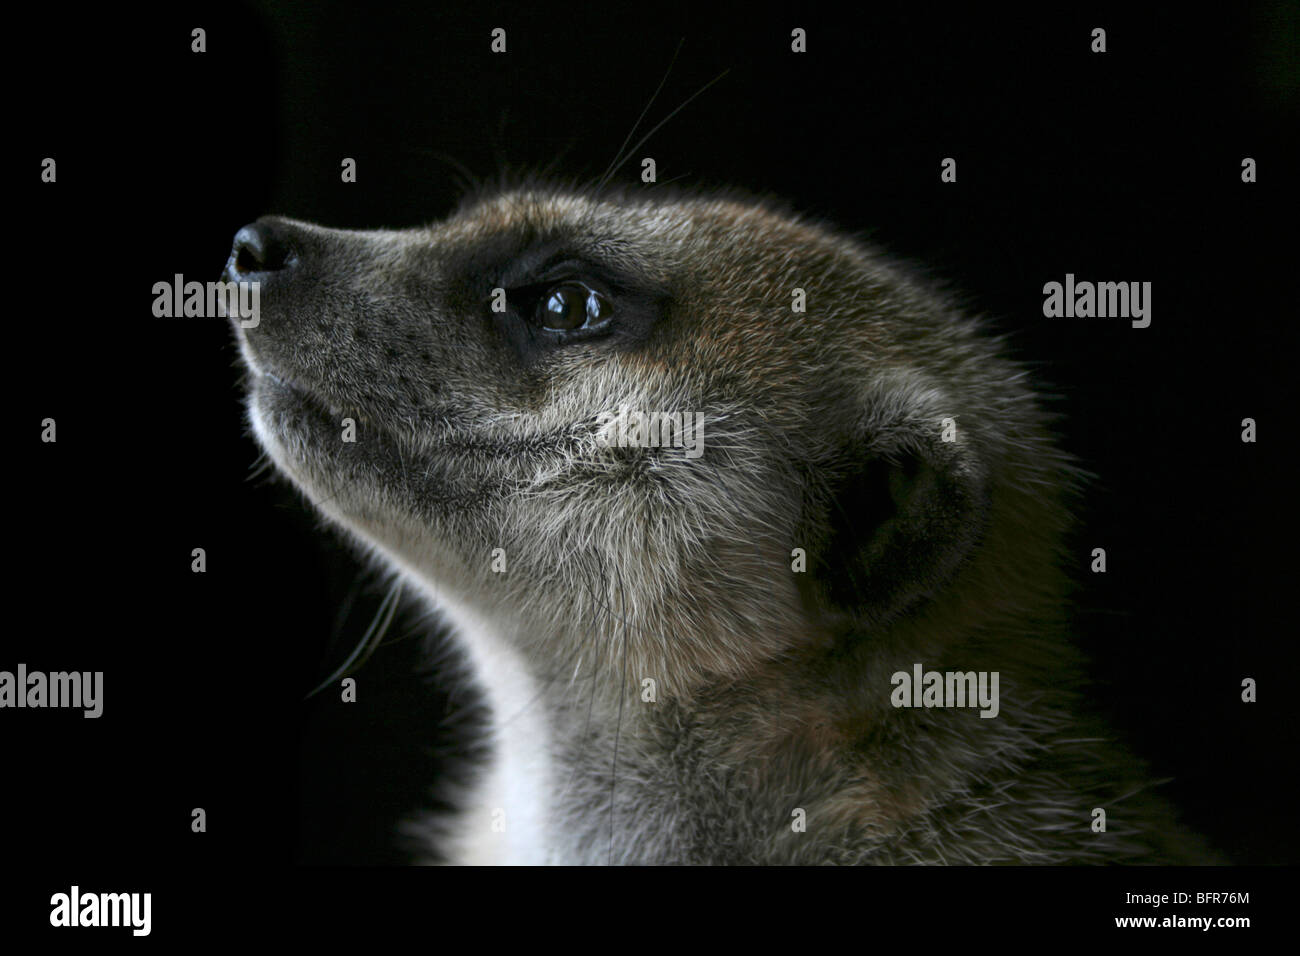 Meerkat (suricate) portrait against a dark background Stock Photo